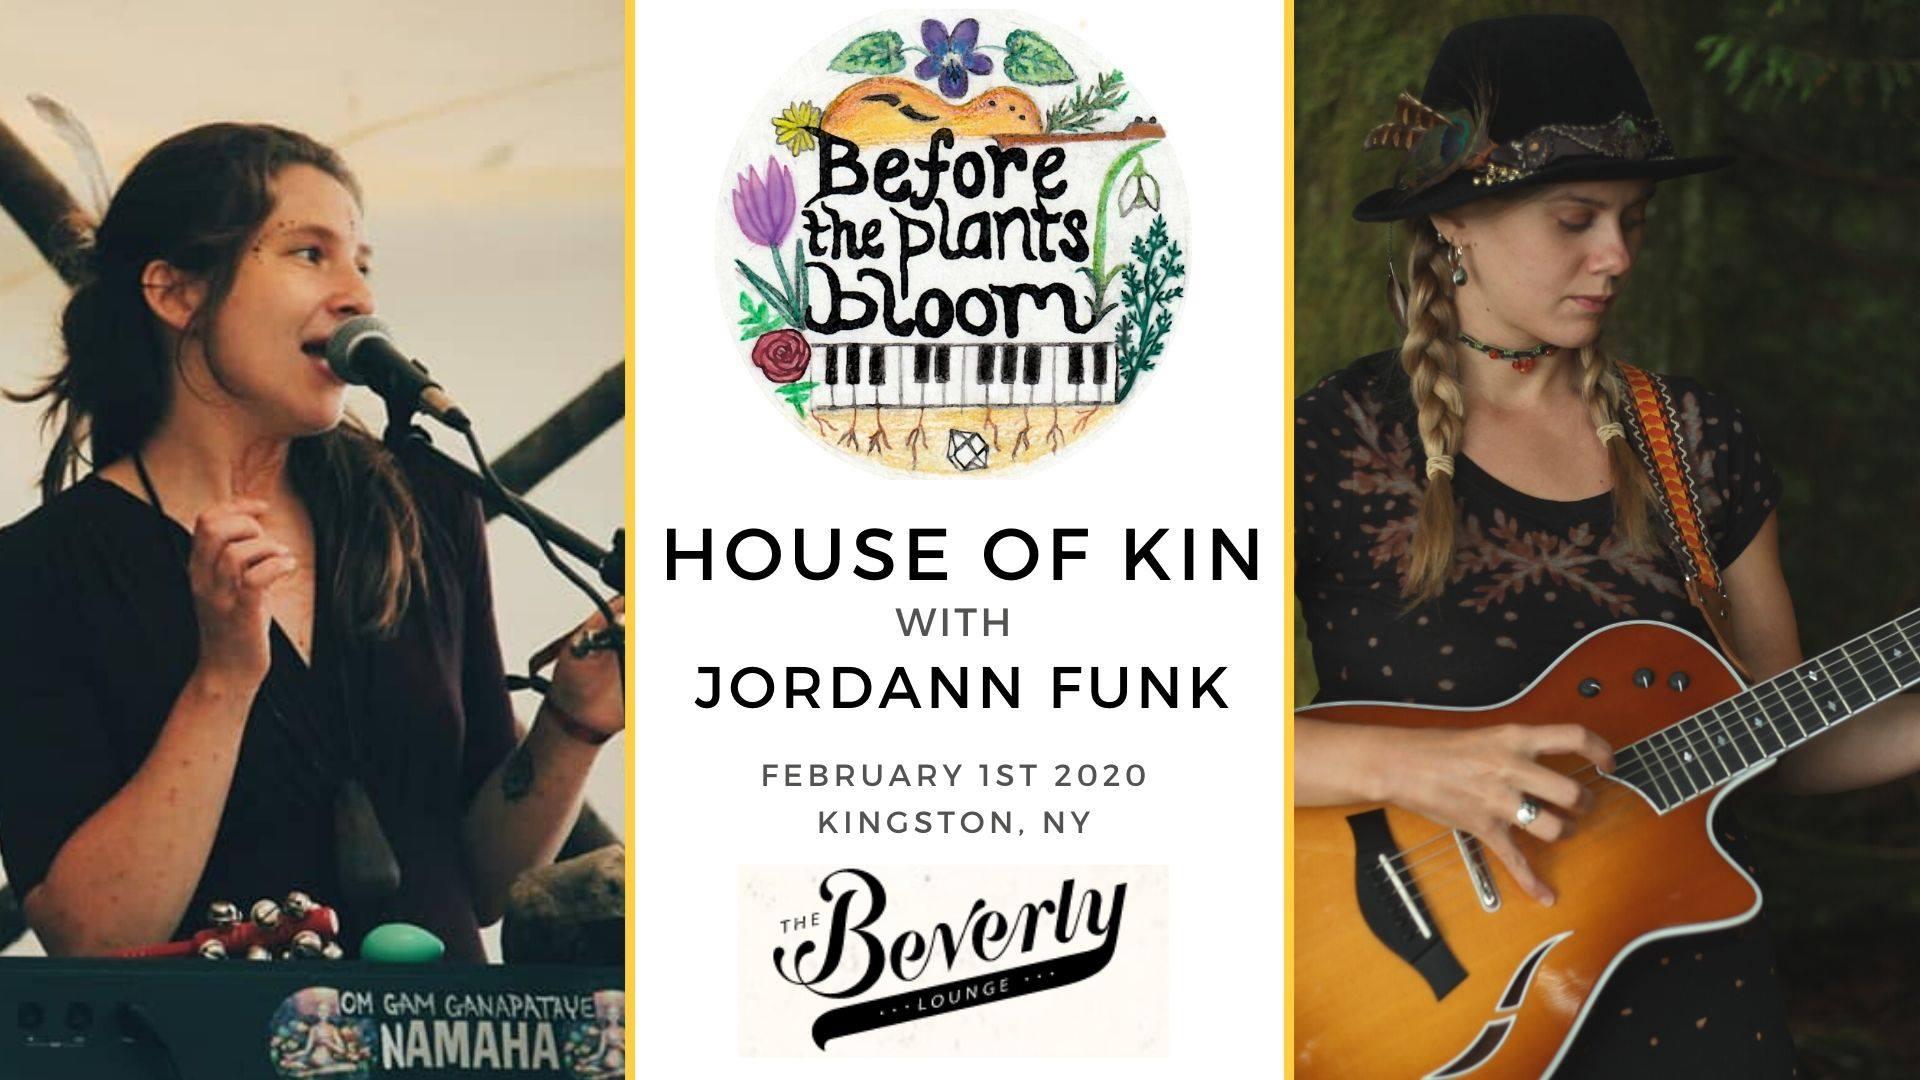 House of Kin with Jordann Funk in Kingston, NY